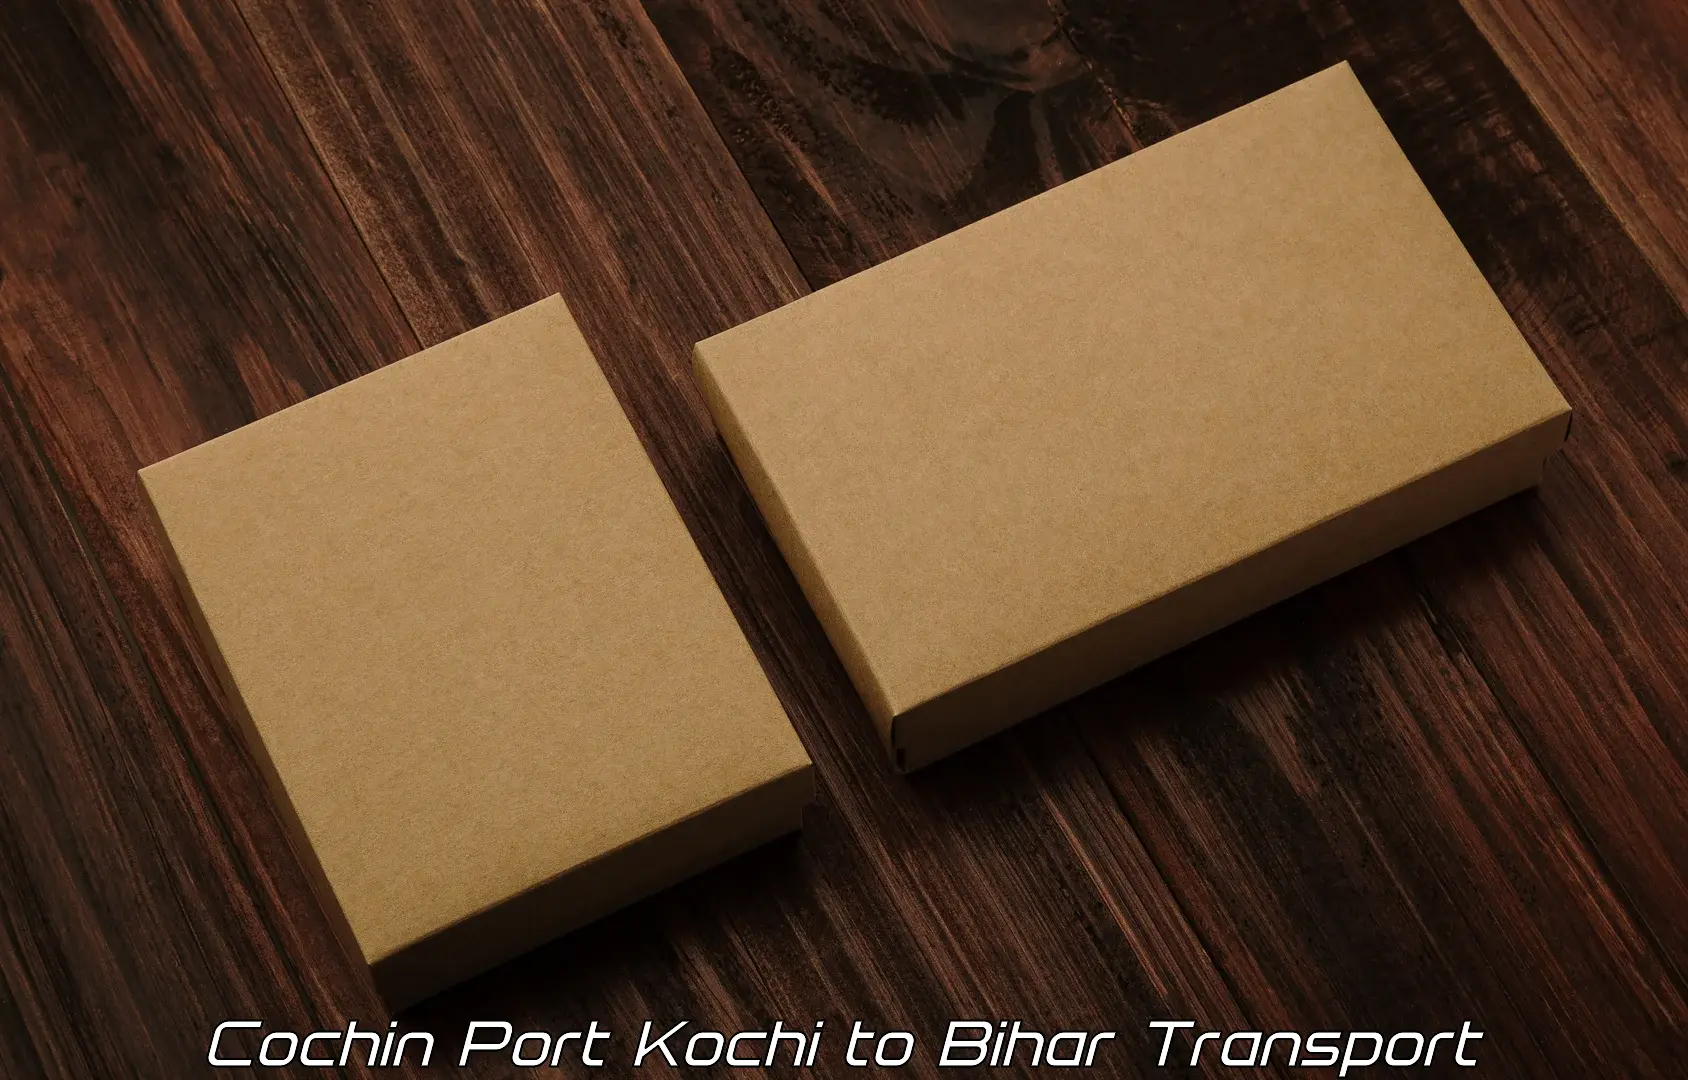 Air freight transport services Cochin Port Kochi to Bihar